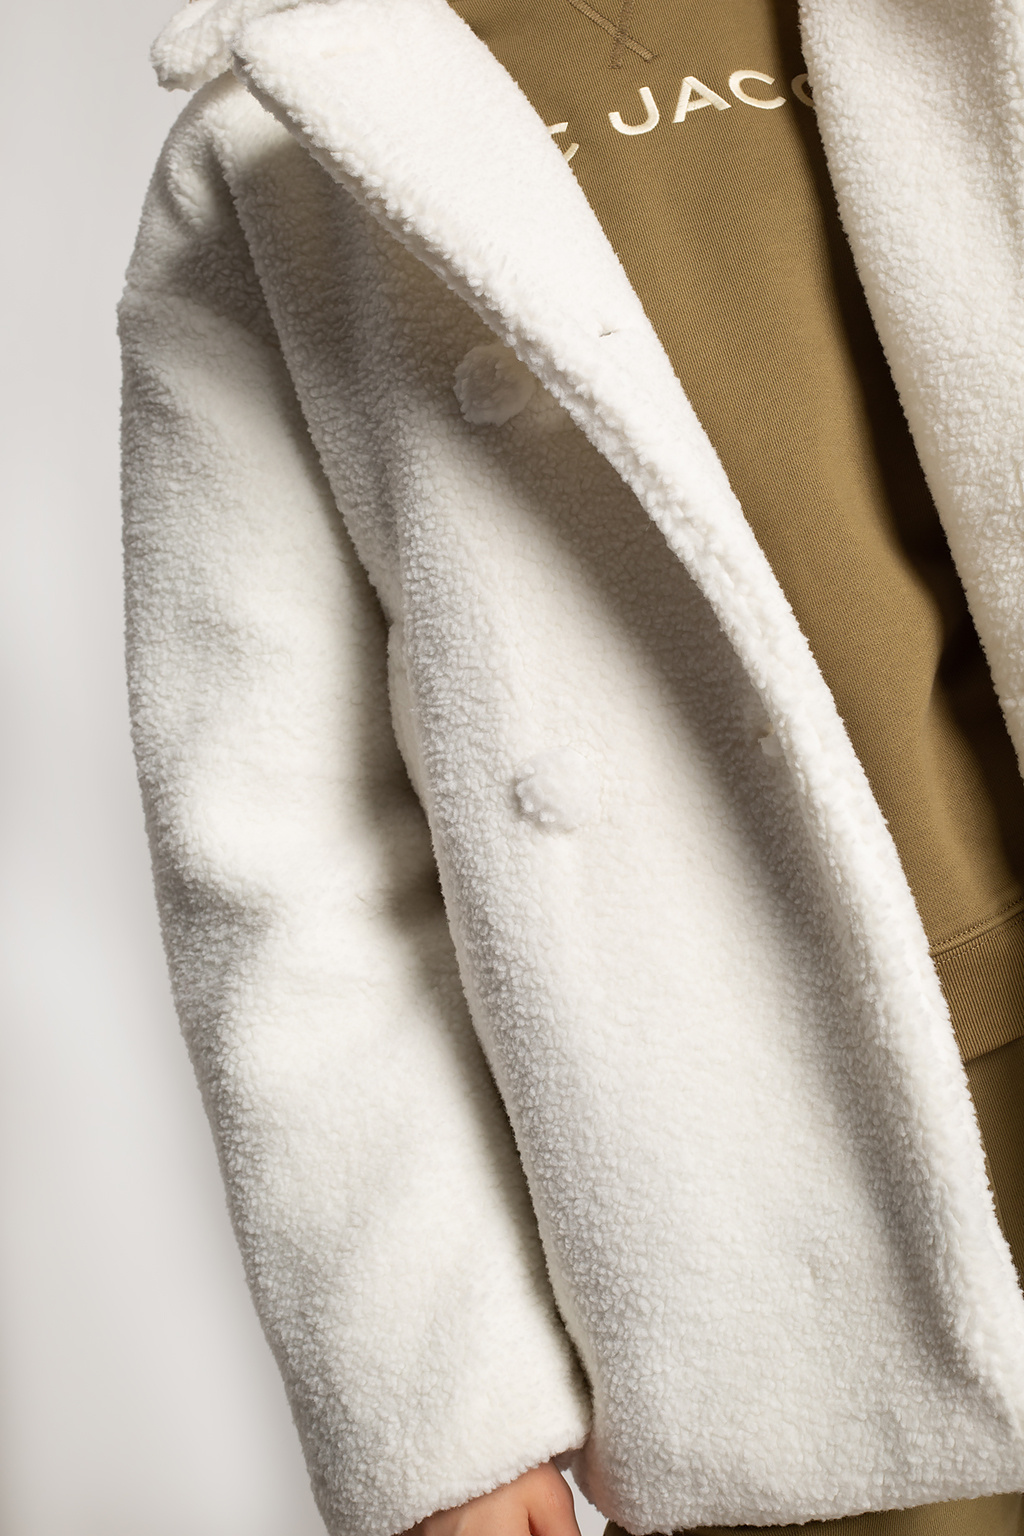 proenza top Schouler White Label Fur coat